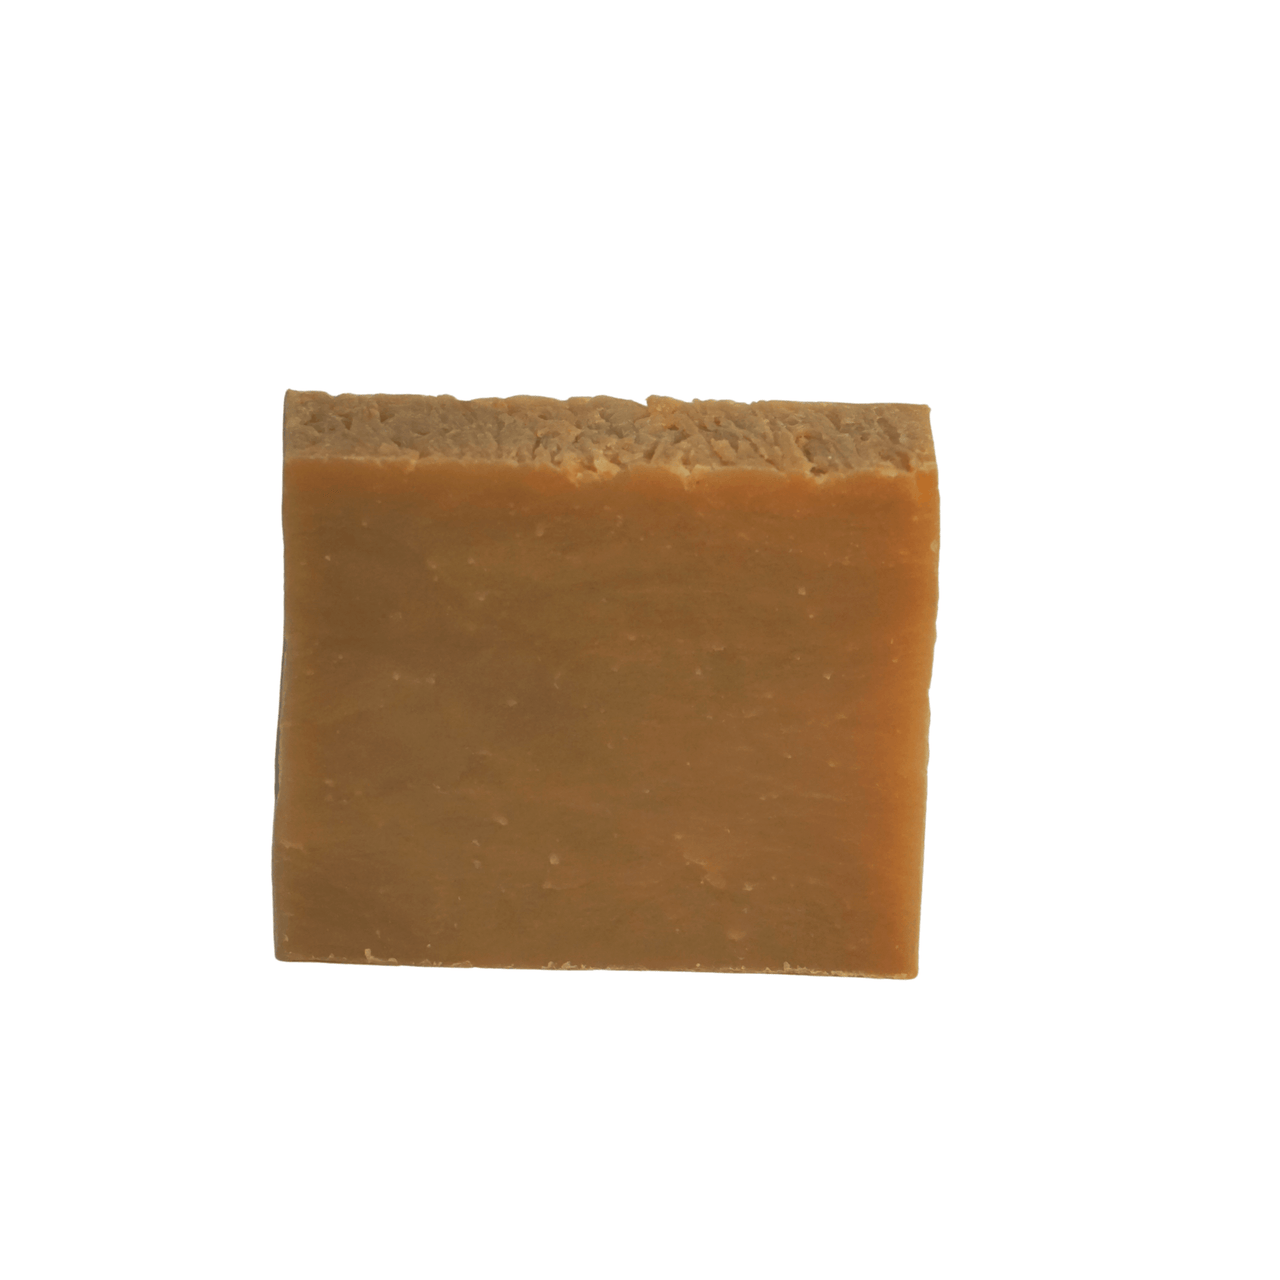 Honey Almond Natural Soap